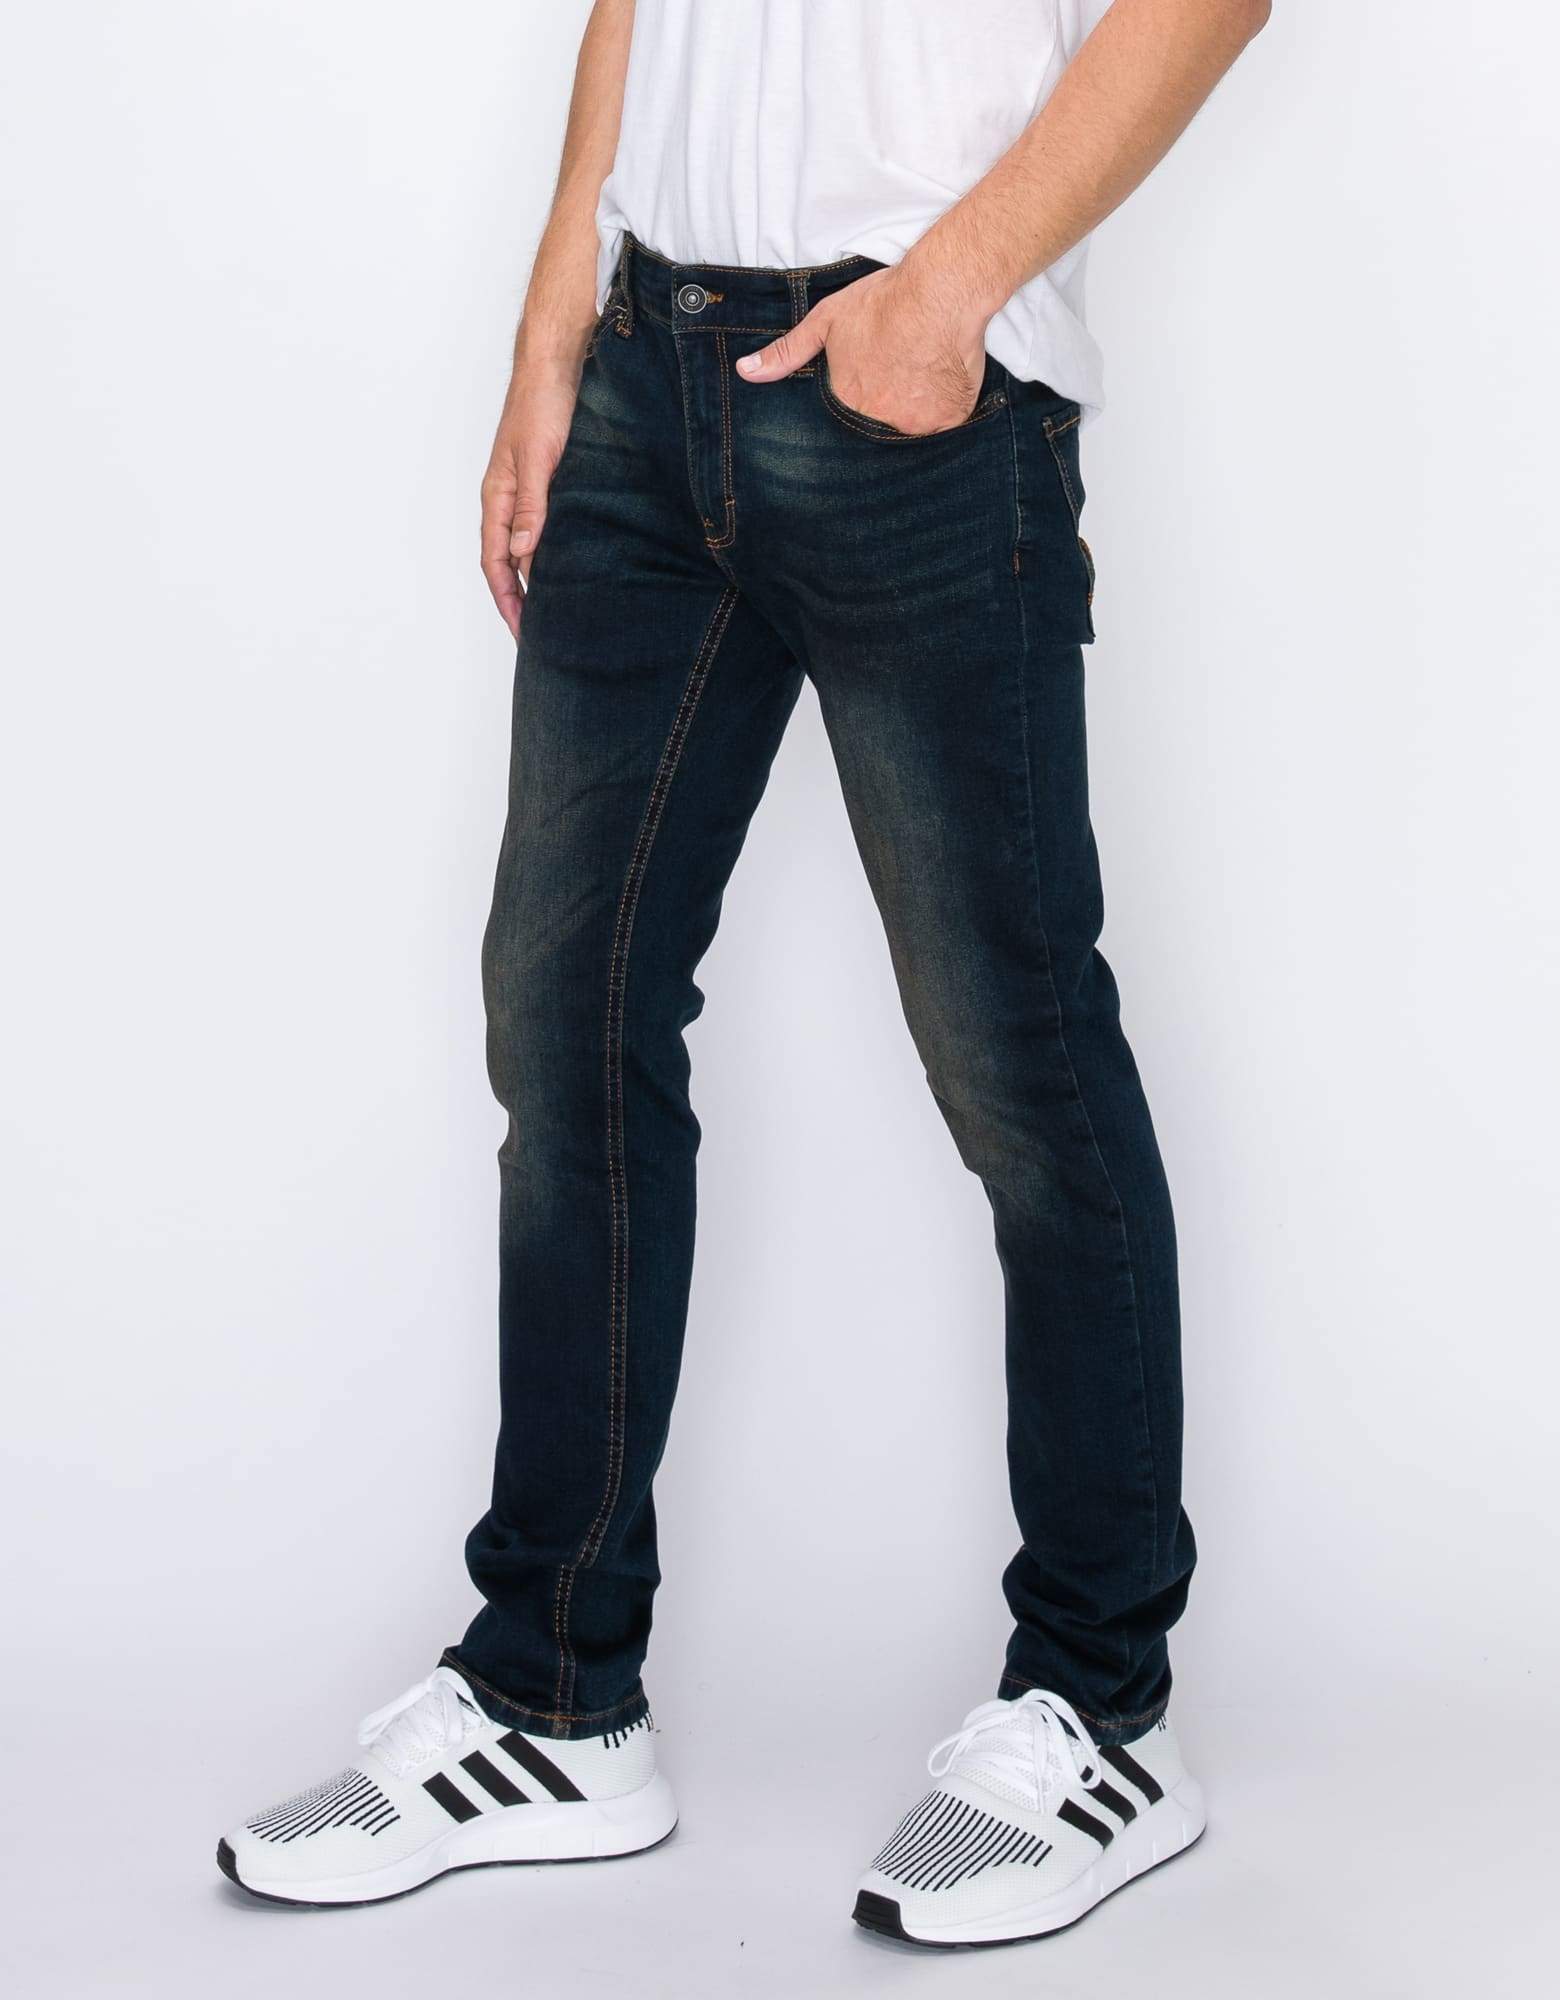 RING OF FIRE Men's 5 Pockets Slim Denim Stretch Jeans - image 4 of 6